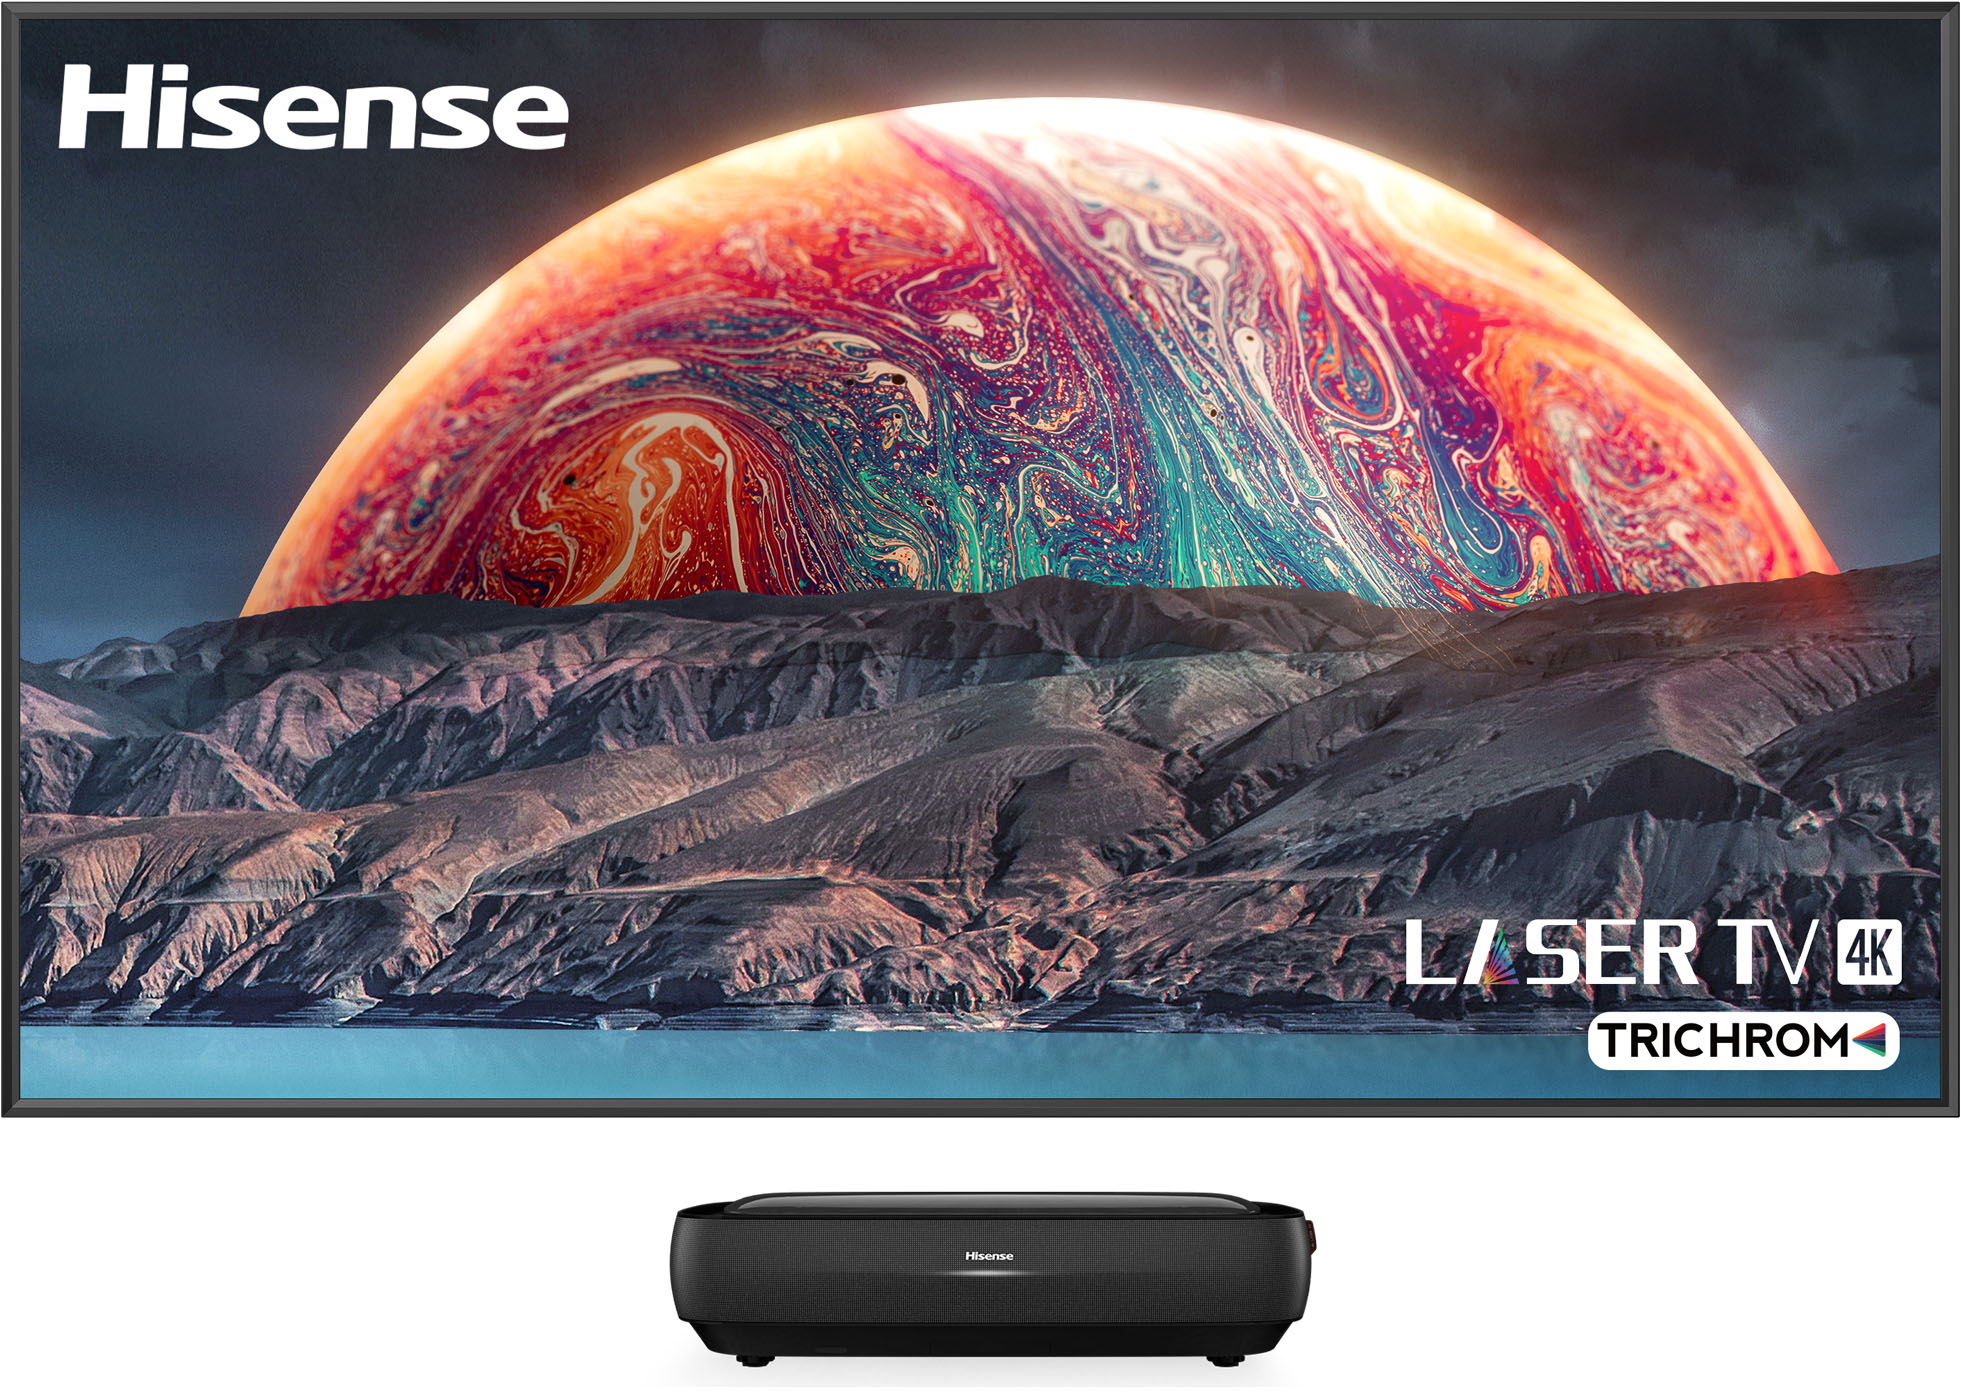 Hisense - 120" L9 Series TriChroma Laser TV with ALR Screen - Black